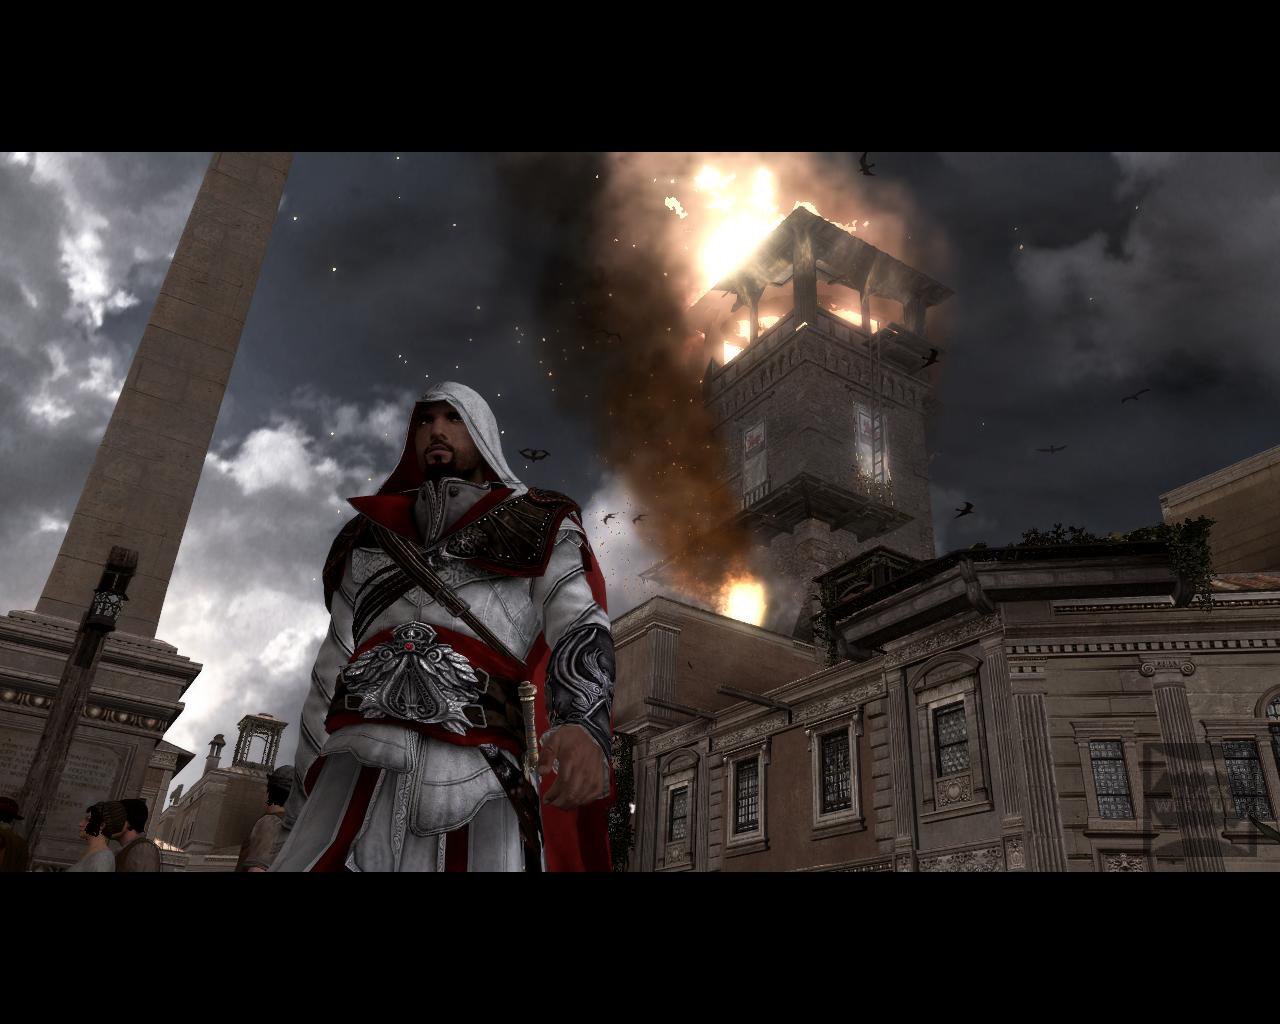 Flaherty brotherhood. Assassin's Creed Brotherhood Gameplay. Assassin's Creed 2 геймплей. Assassin's Creed Brotherhood геймплей. Ассасин Крид бразерхуд геймплей.